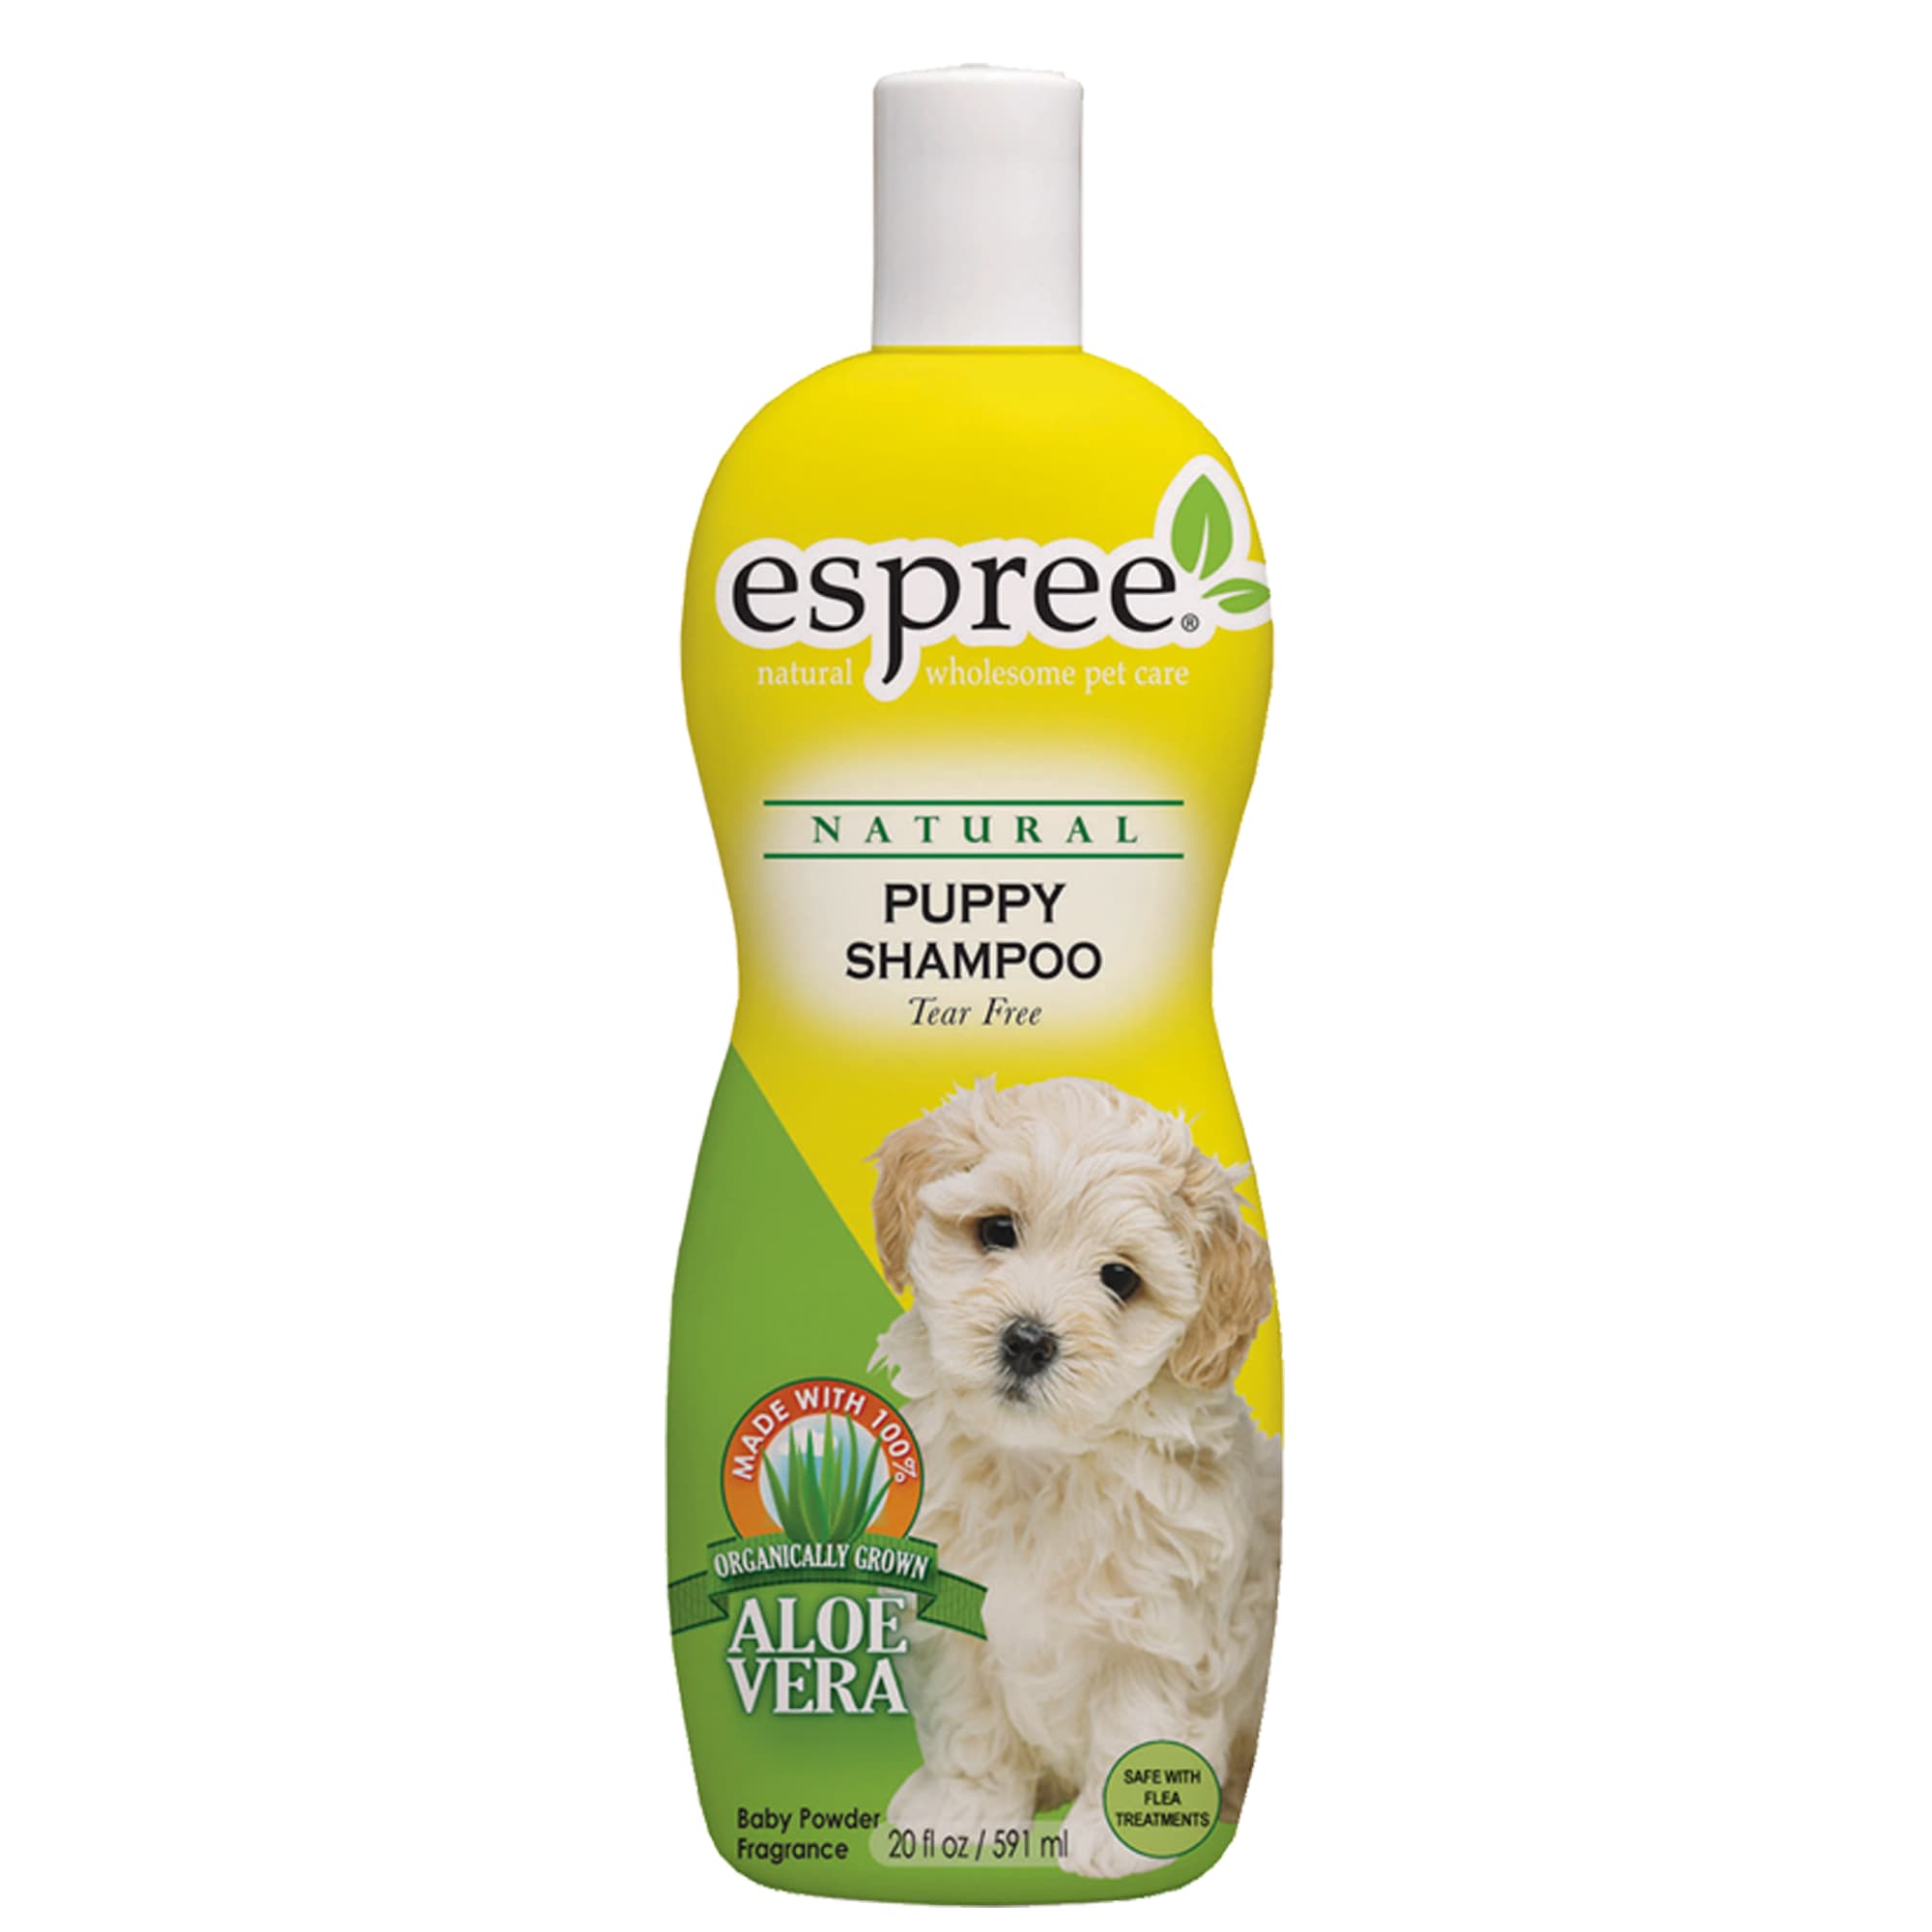 Espree Natural Puppy Shampoo | Petco